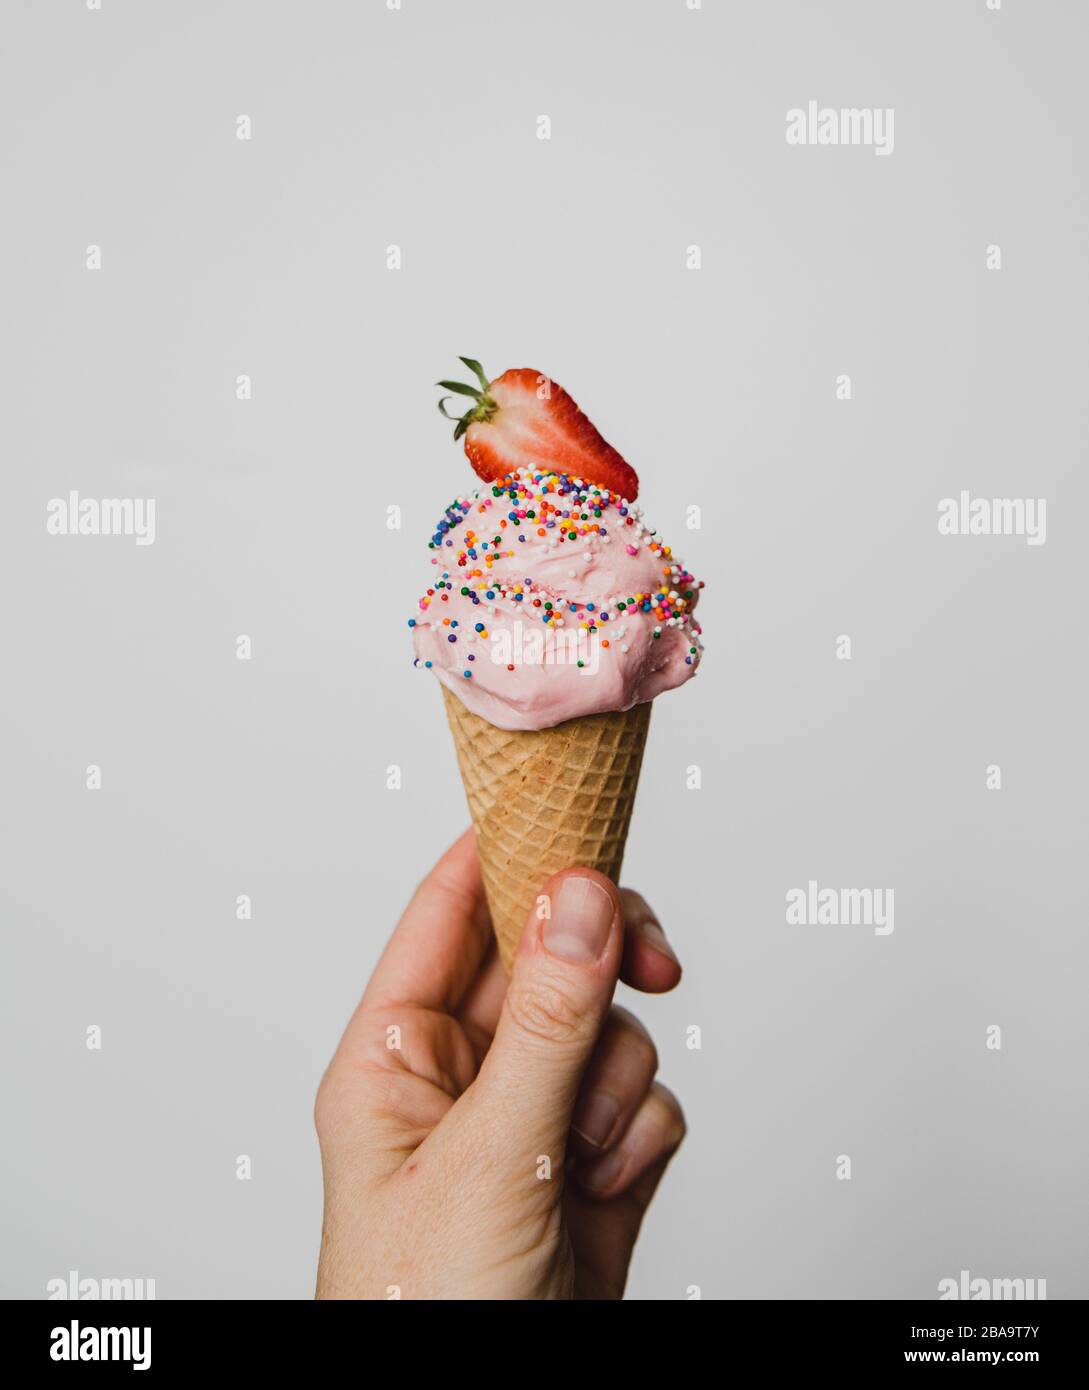 Hand holding strawberry ice cream cone against white background. Stock Photo